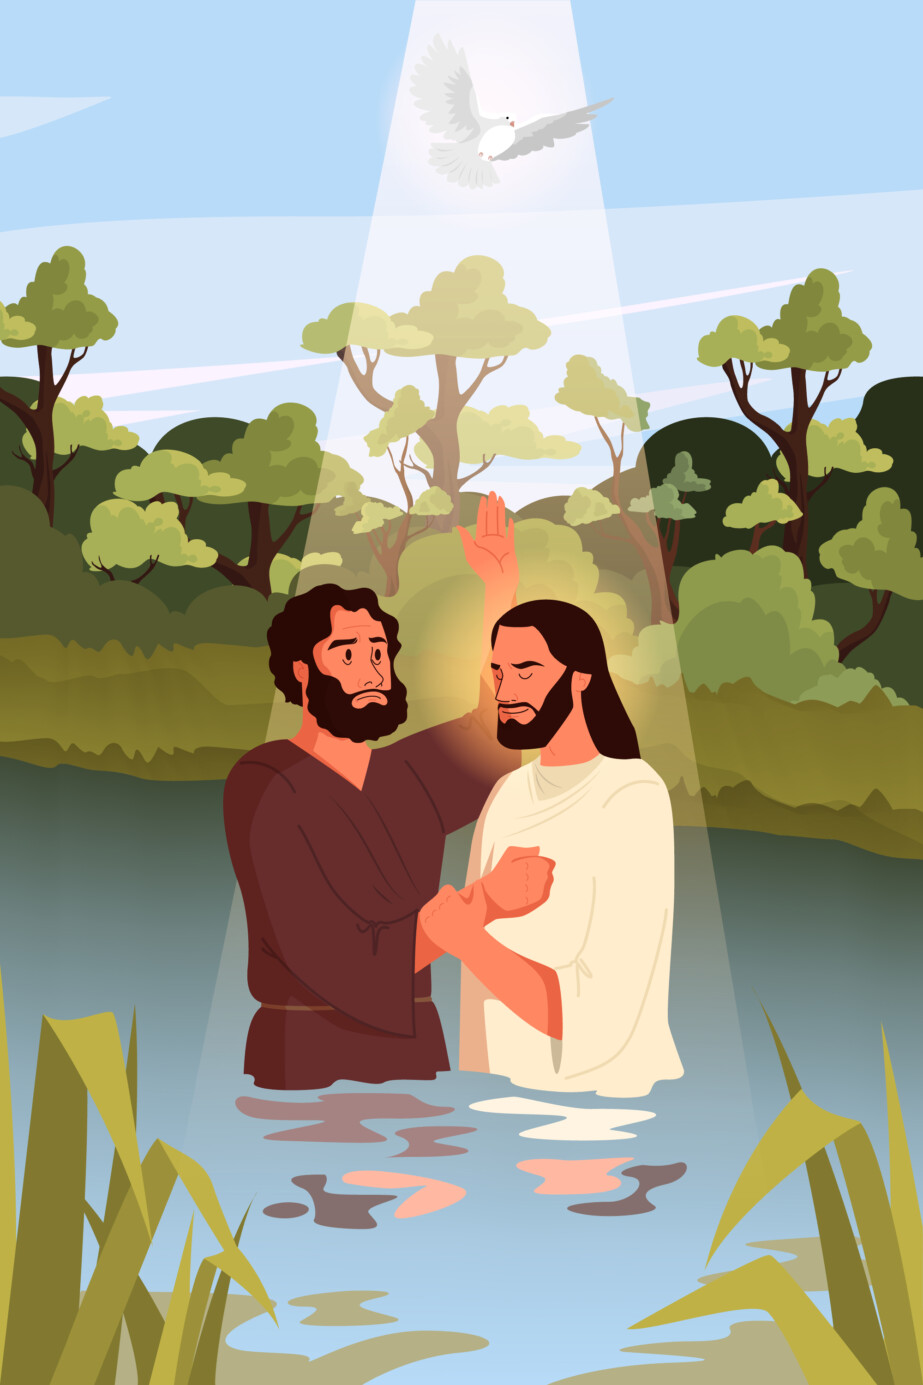 Baptism Of Jesus By John The Baptist - Original image